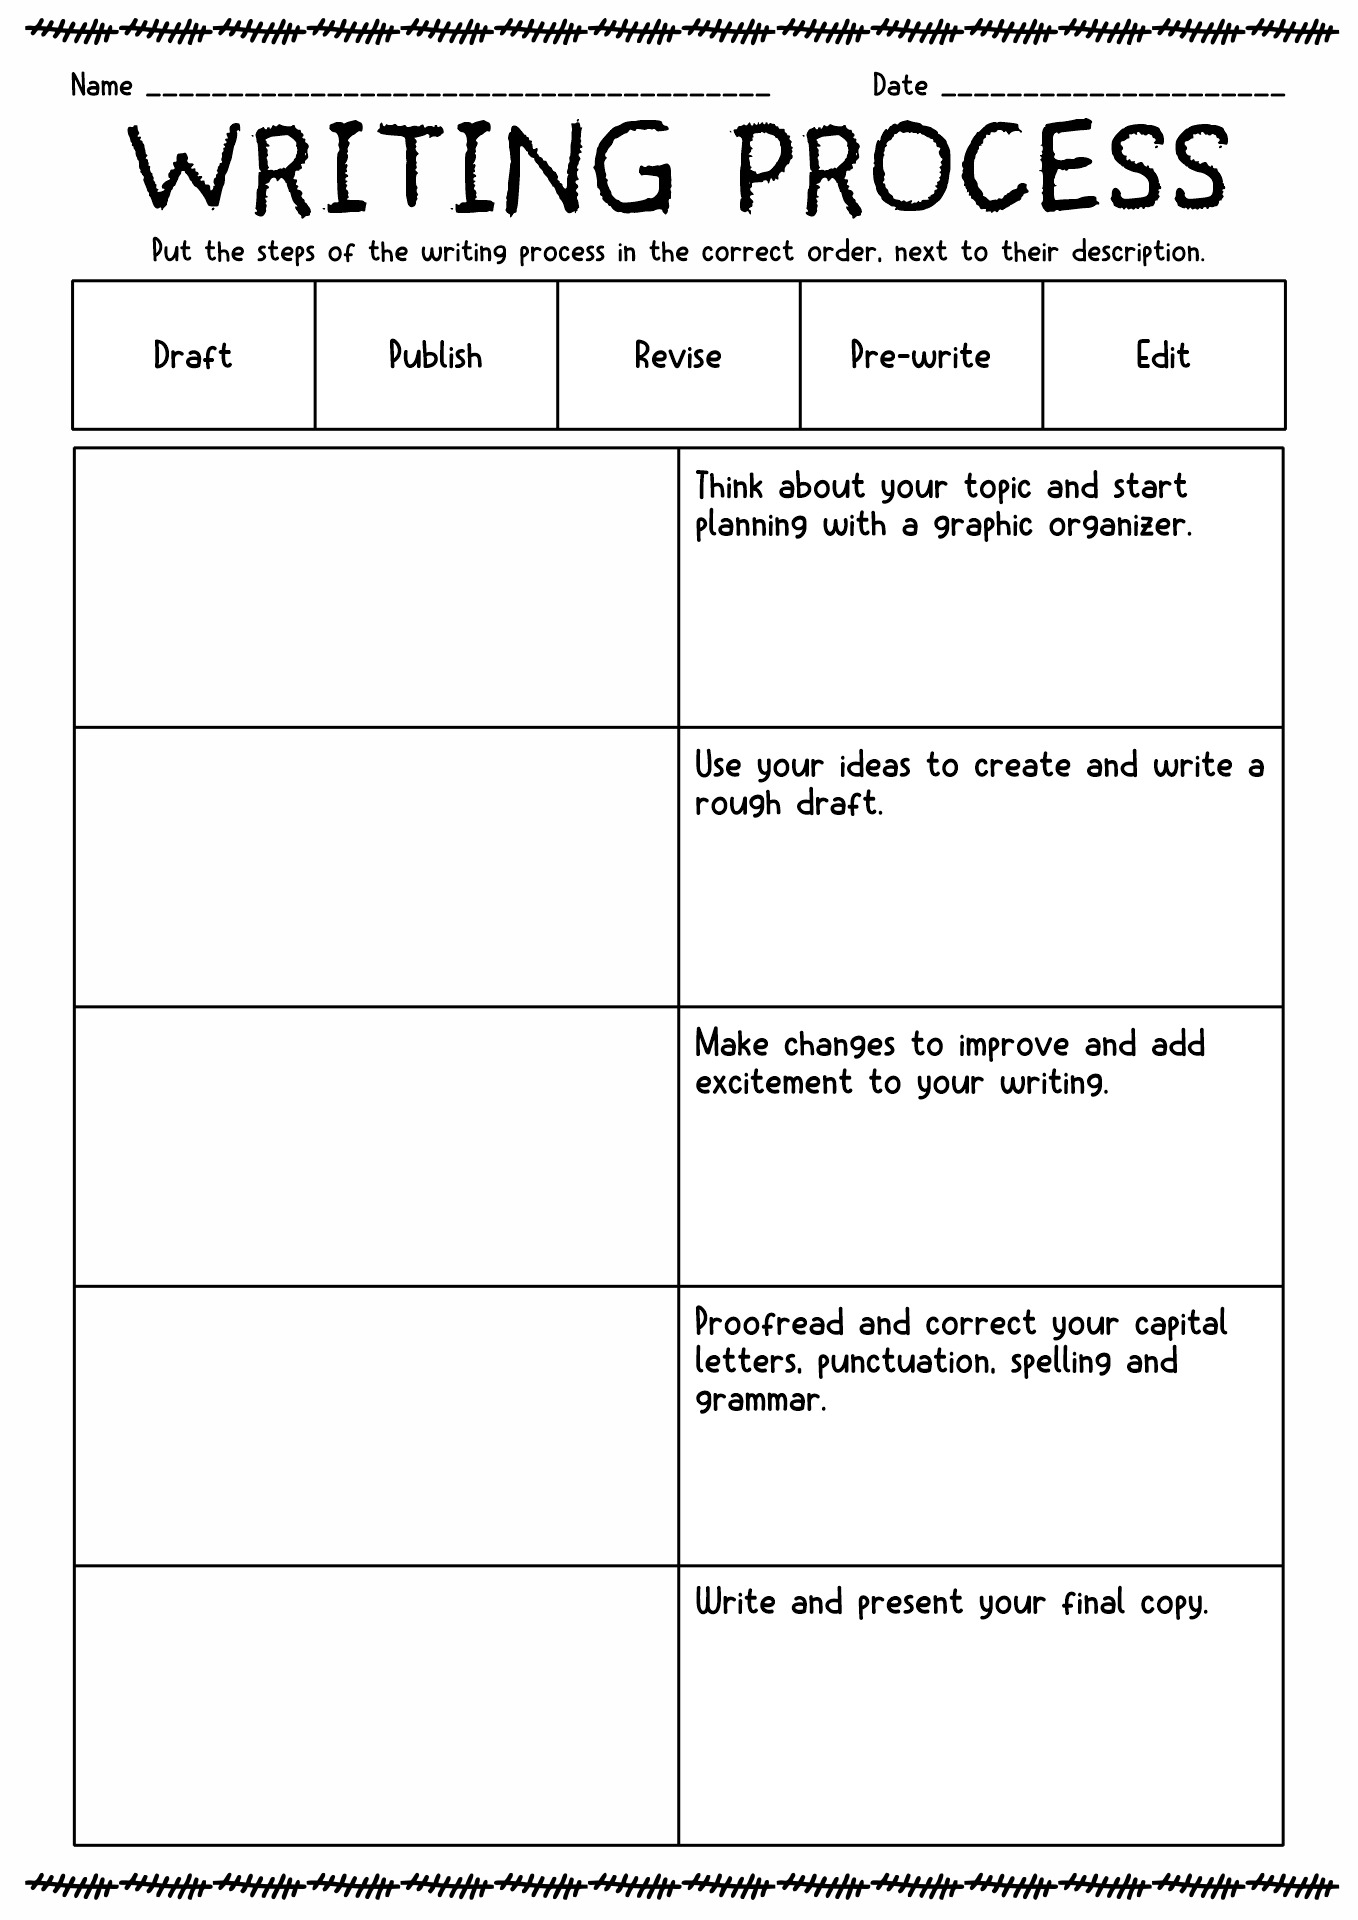 Writing Process Activity Worksheet